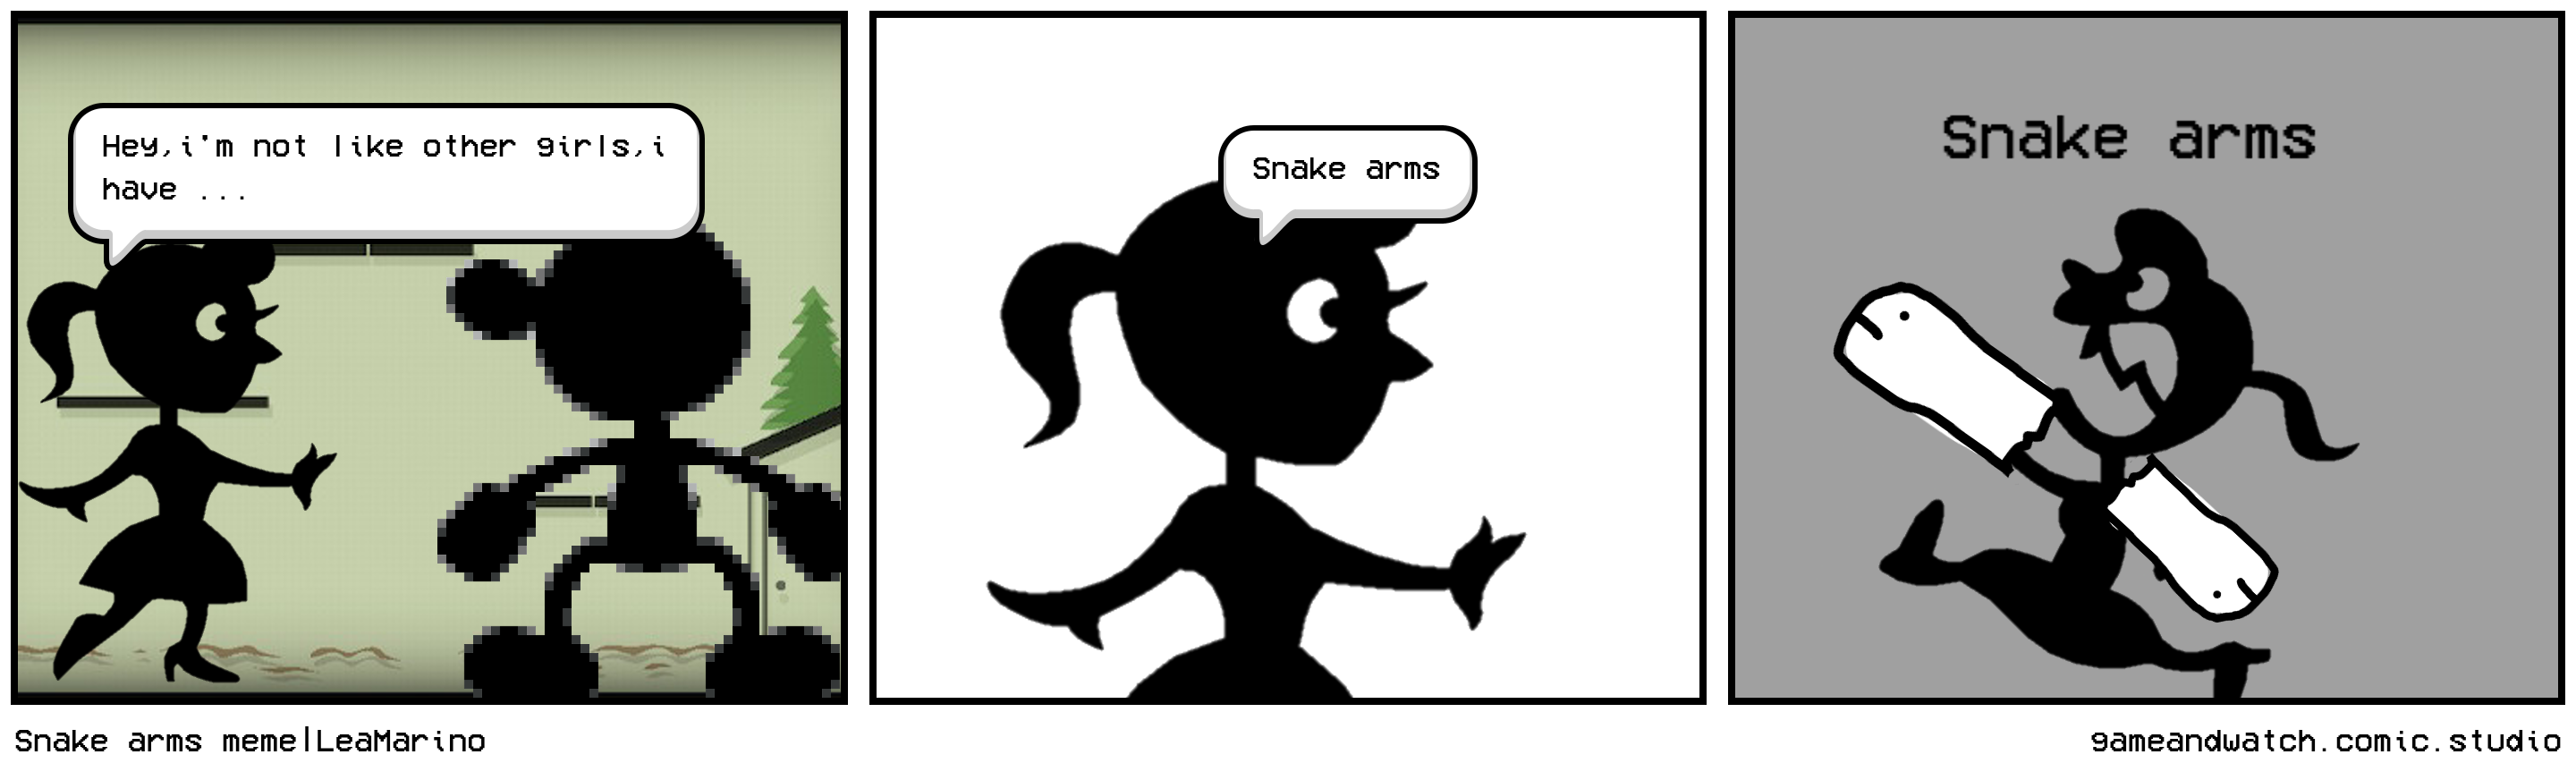 Snake arms meme|LeaMarino